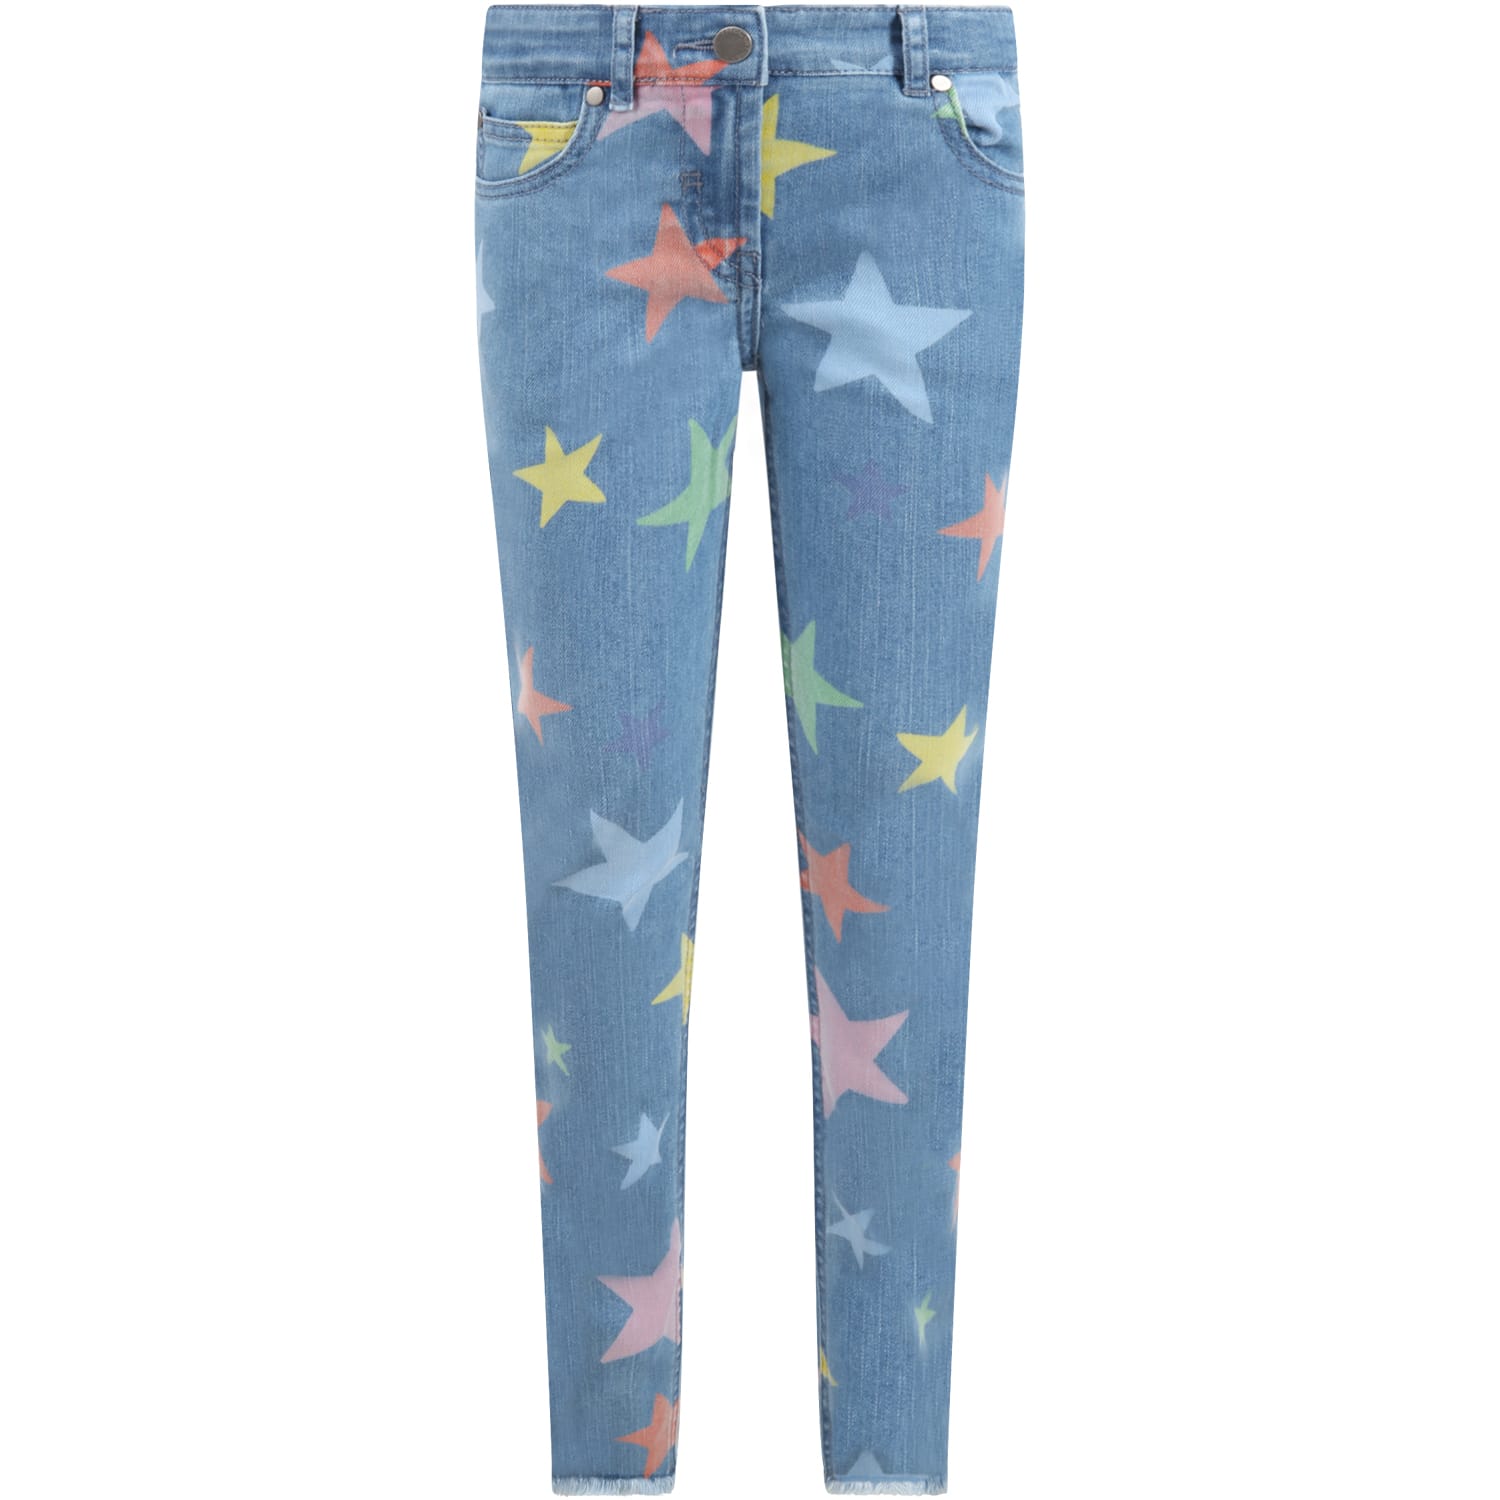 Stella McCartney Kids Light Blue Jeans For Girl With Stars